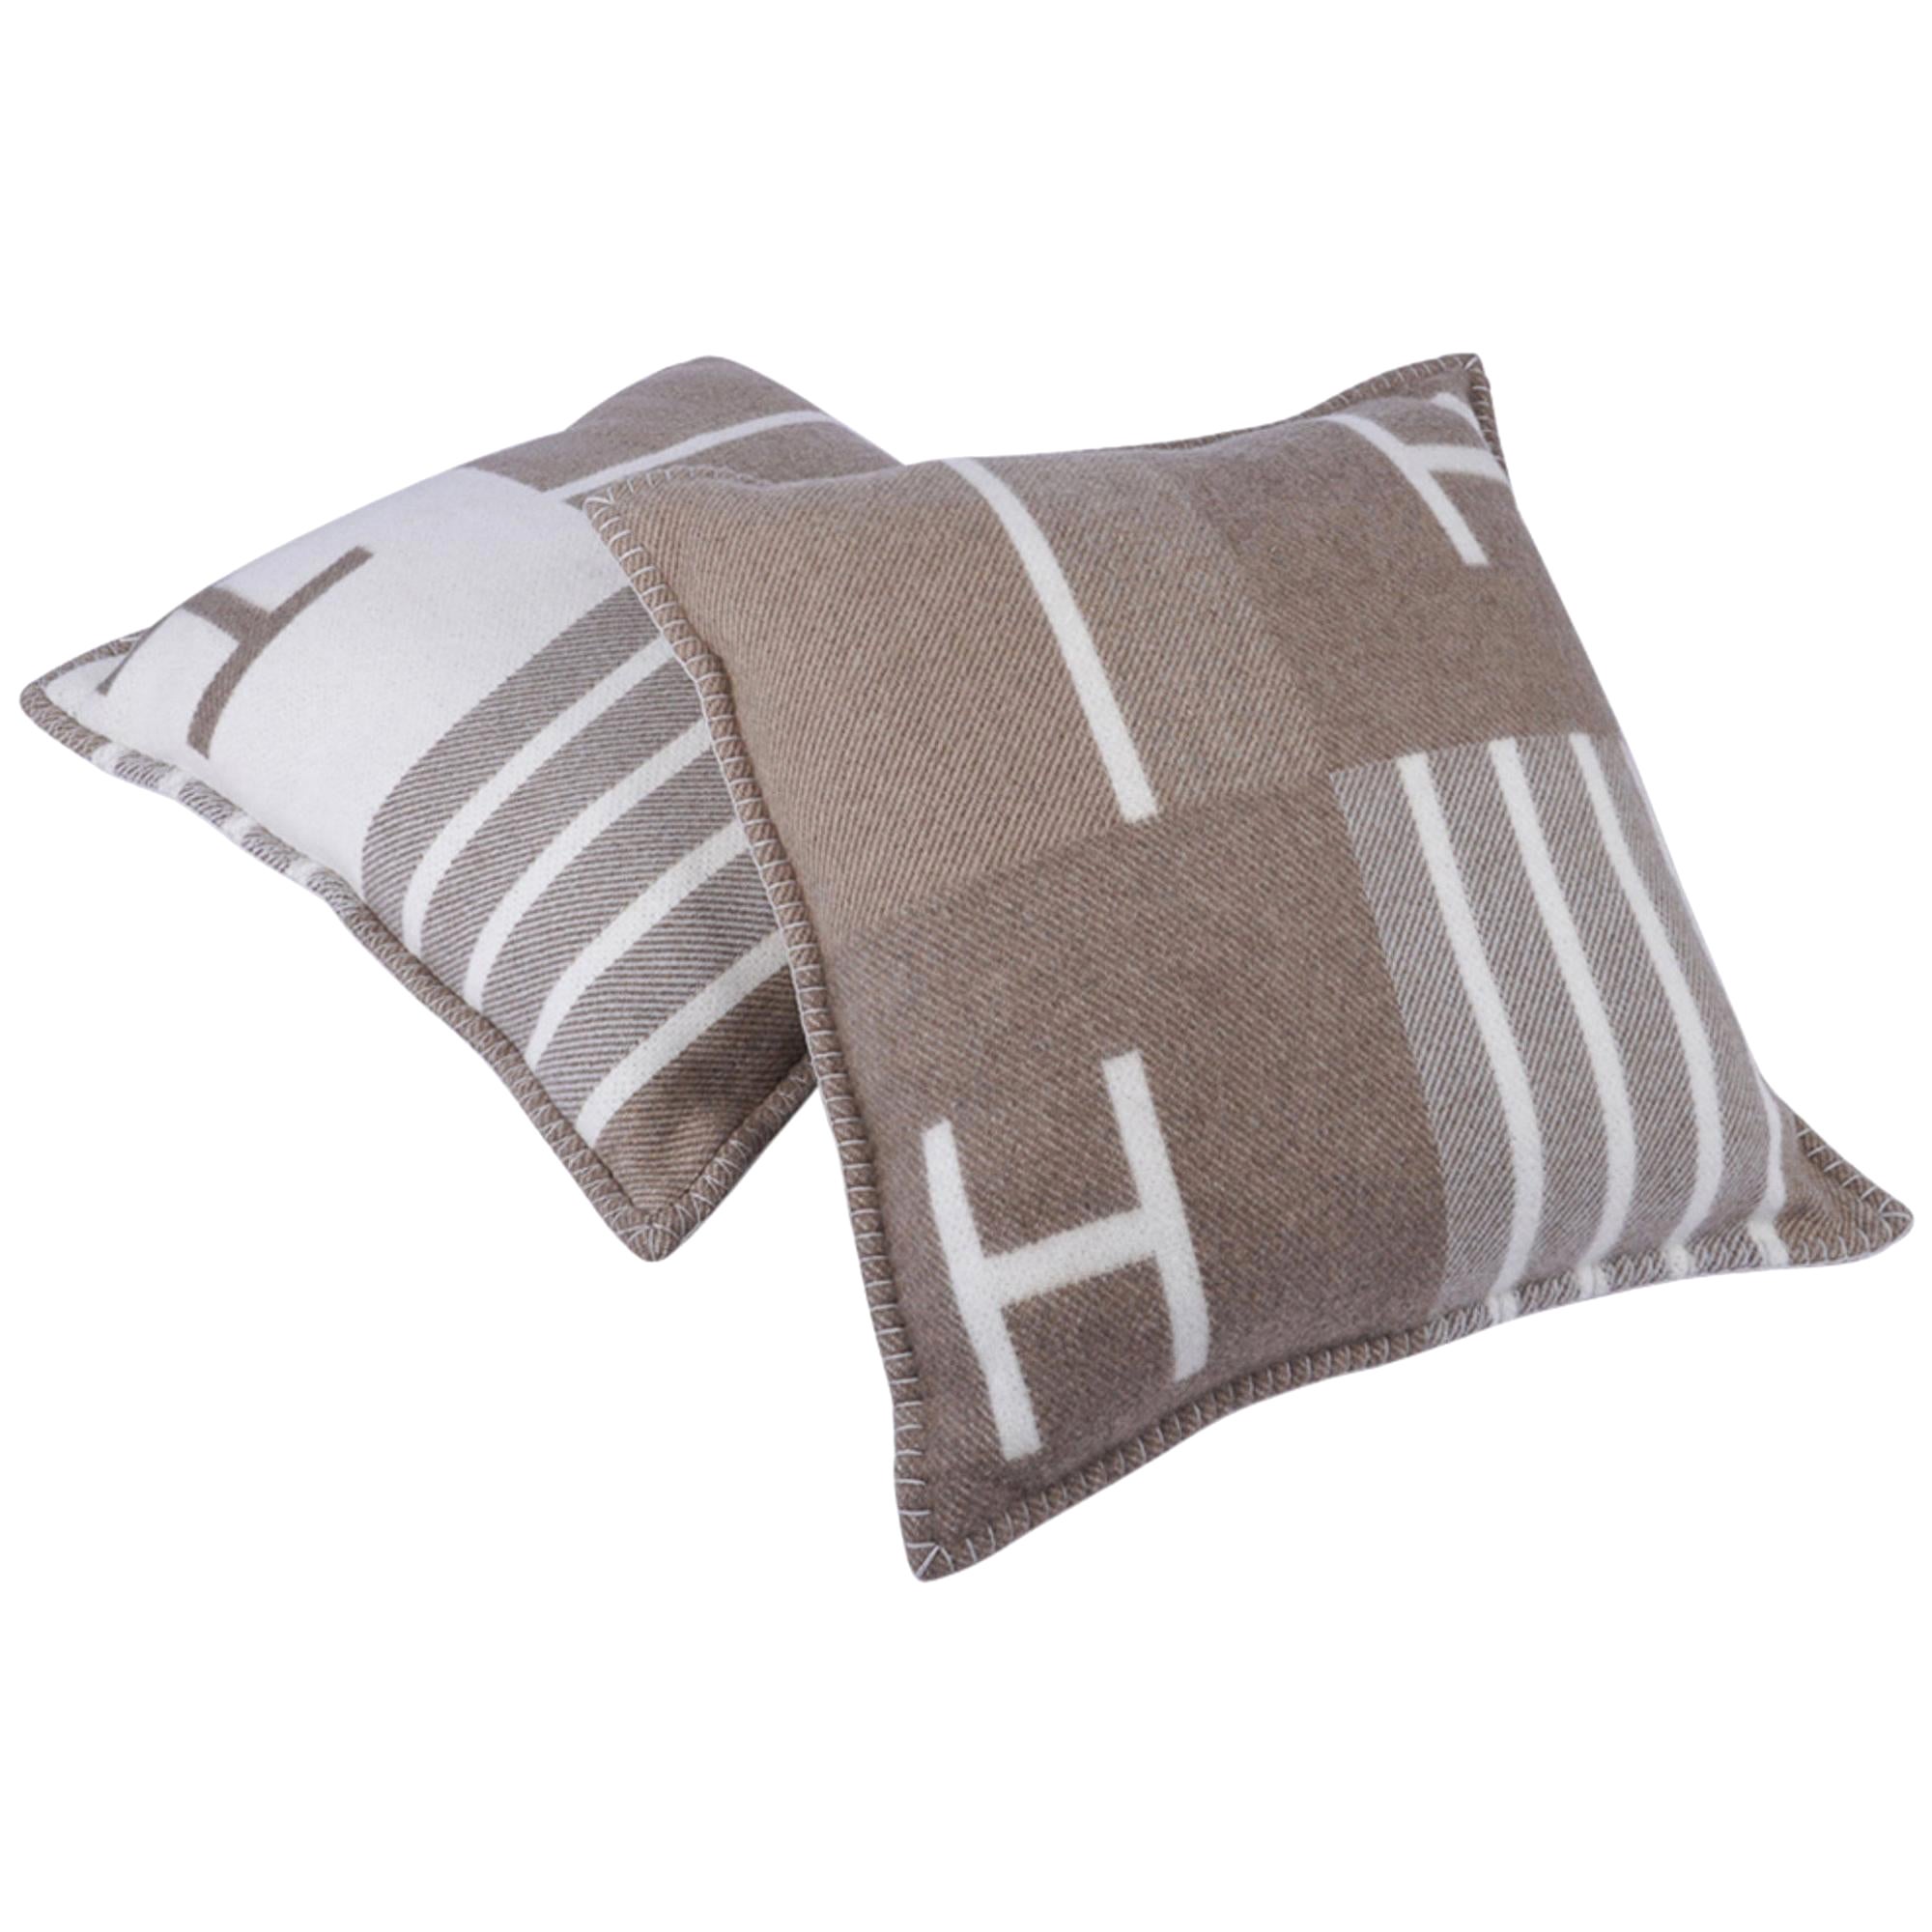 Hermes Avalon Vibration Pillow Naturel Zweier-Set Limited Edition